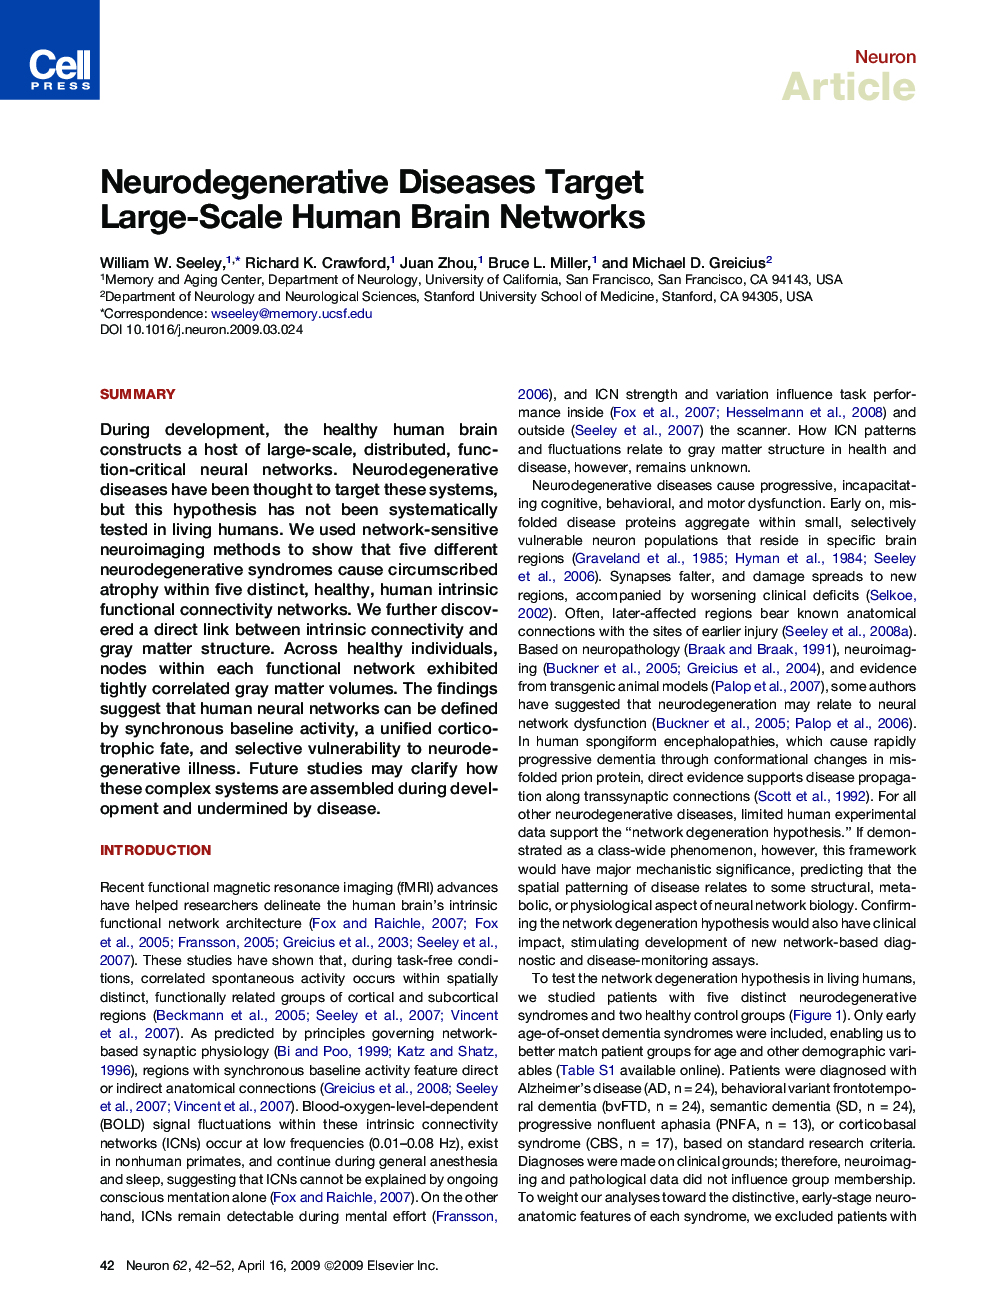 Neurodegenerative Diseases Target Large-Scale Human Brain Networks